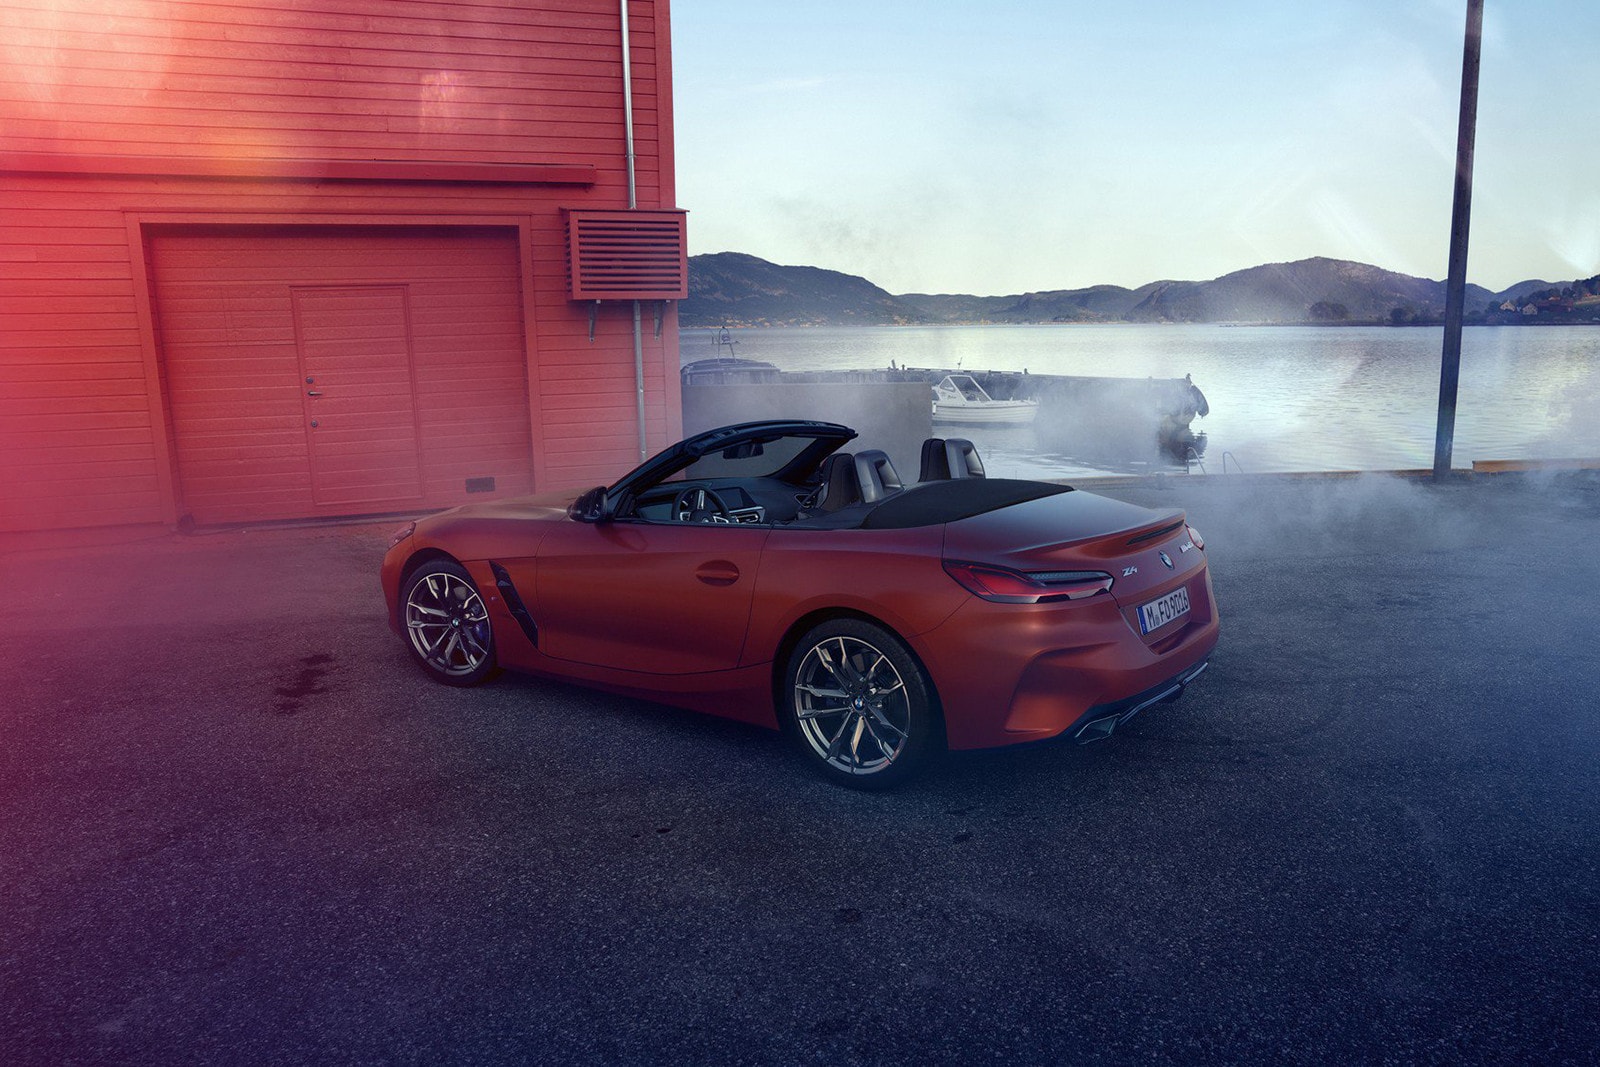 Extremely Powerful！2019 年全新 BMW Z4 首度曝光